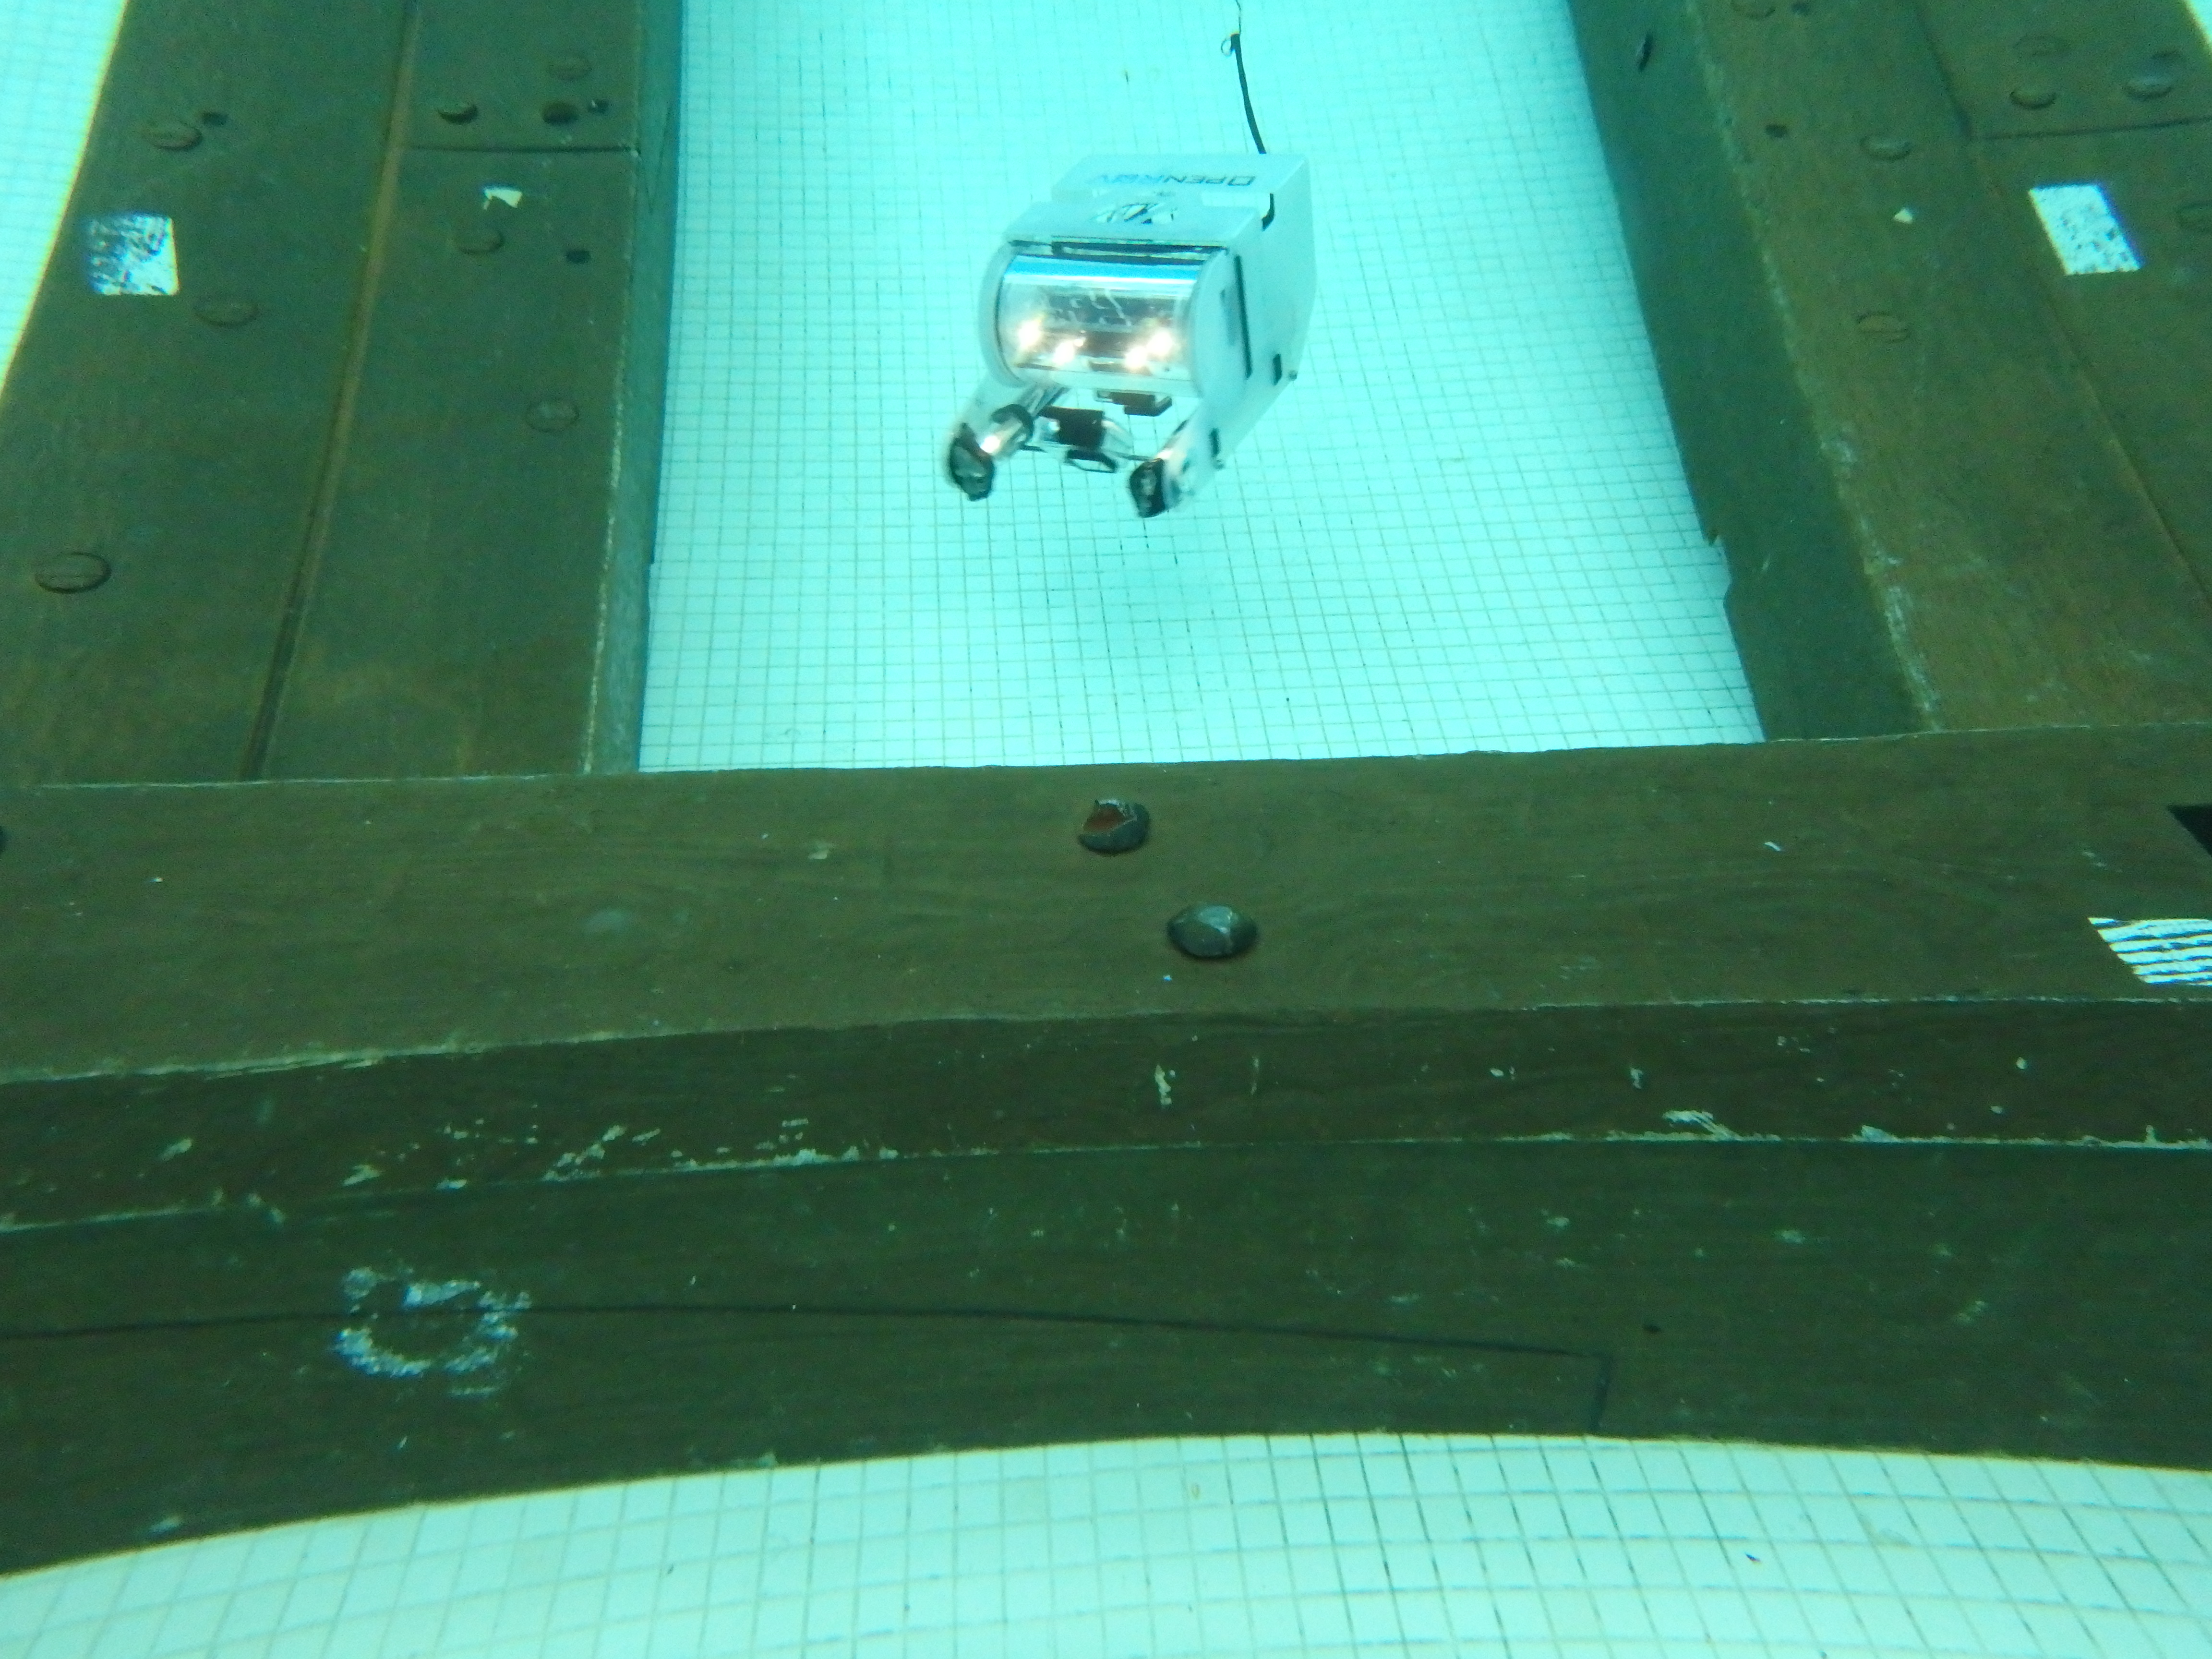 ROV in pool